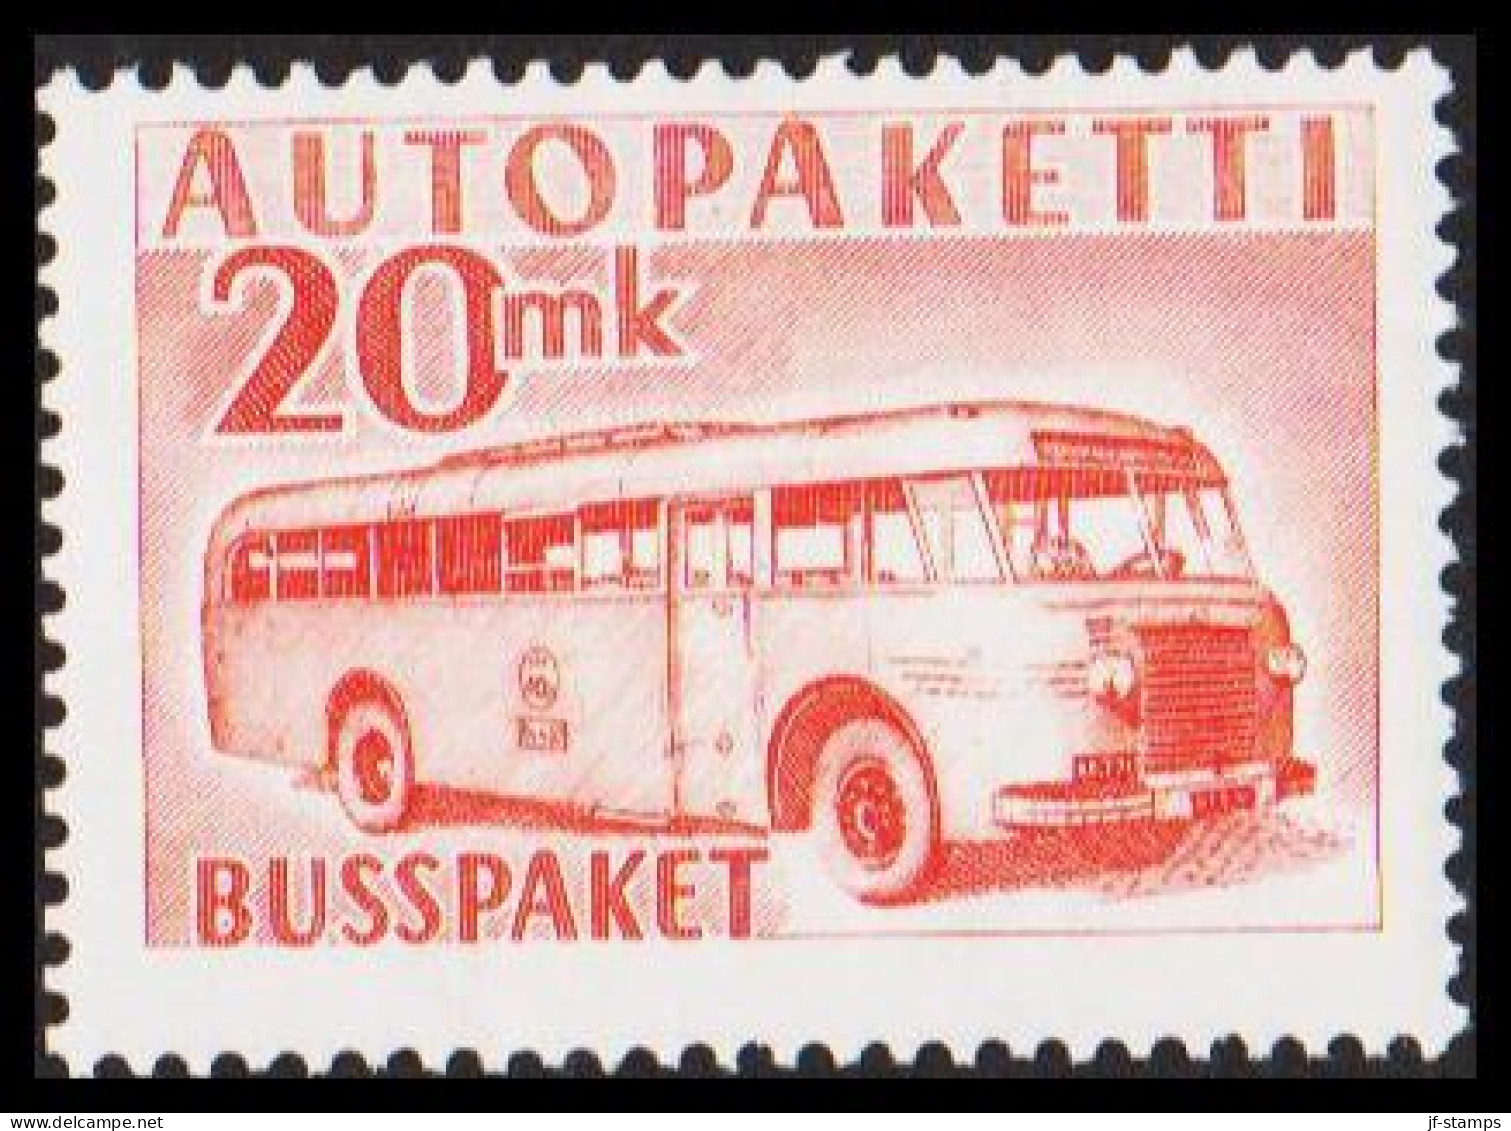 1952-1958. FINLAND. Mail Bus. 20 Mk. AUTOPAKETTI - BUSSPAKET Never Hinged. (Michel AP 7) - JF534382 - Postbuspakete